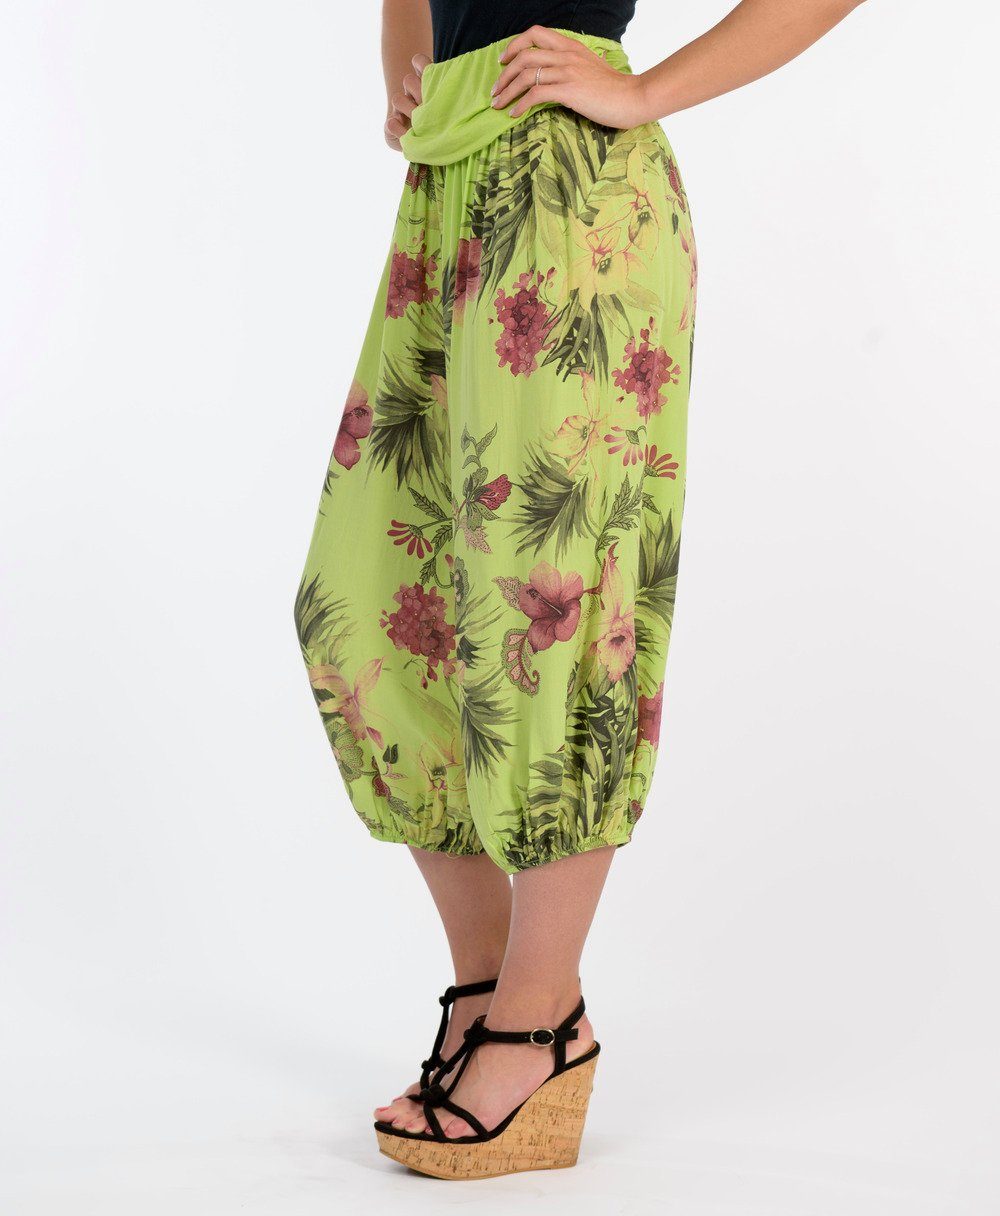 hellgrün Muster Haremshose mit floralem Aladinhose fashion Einheitsgröße more 8938 malito than